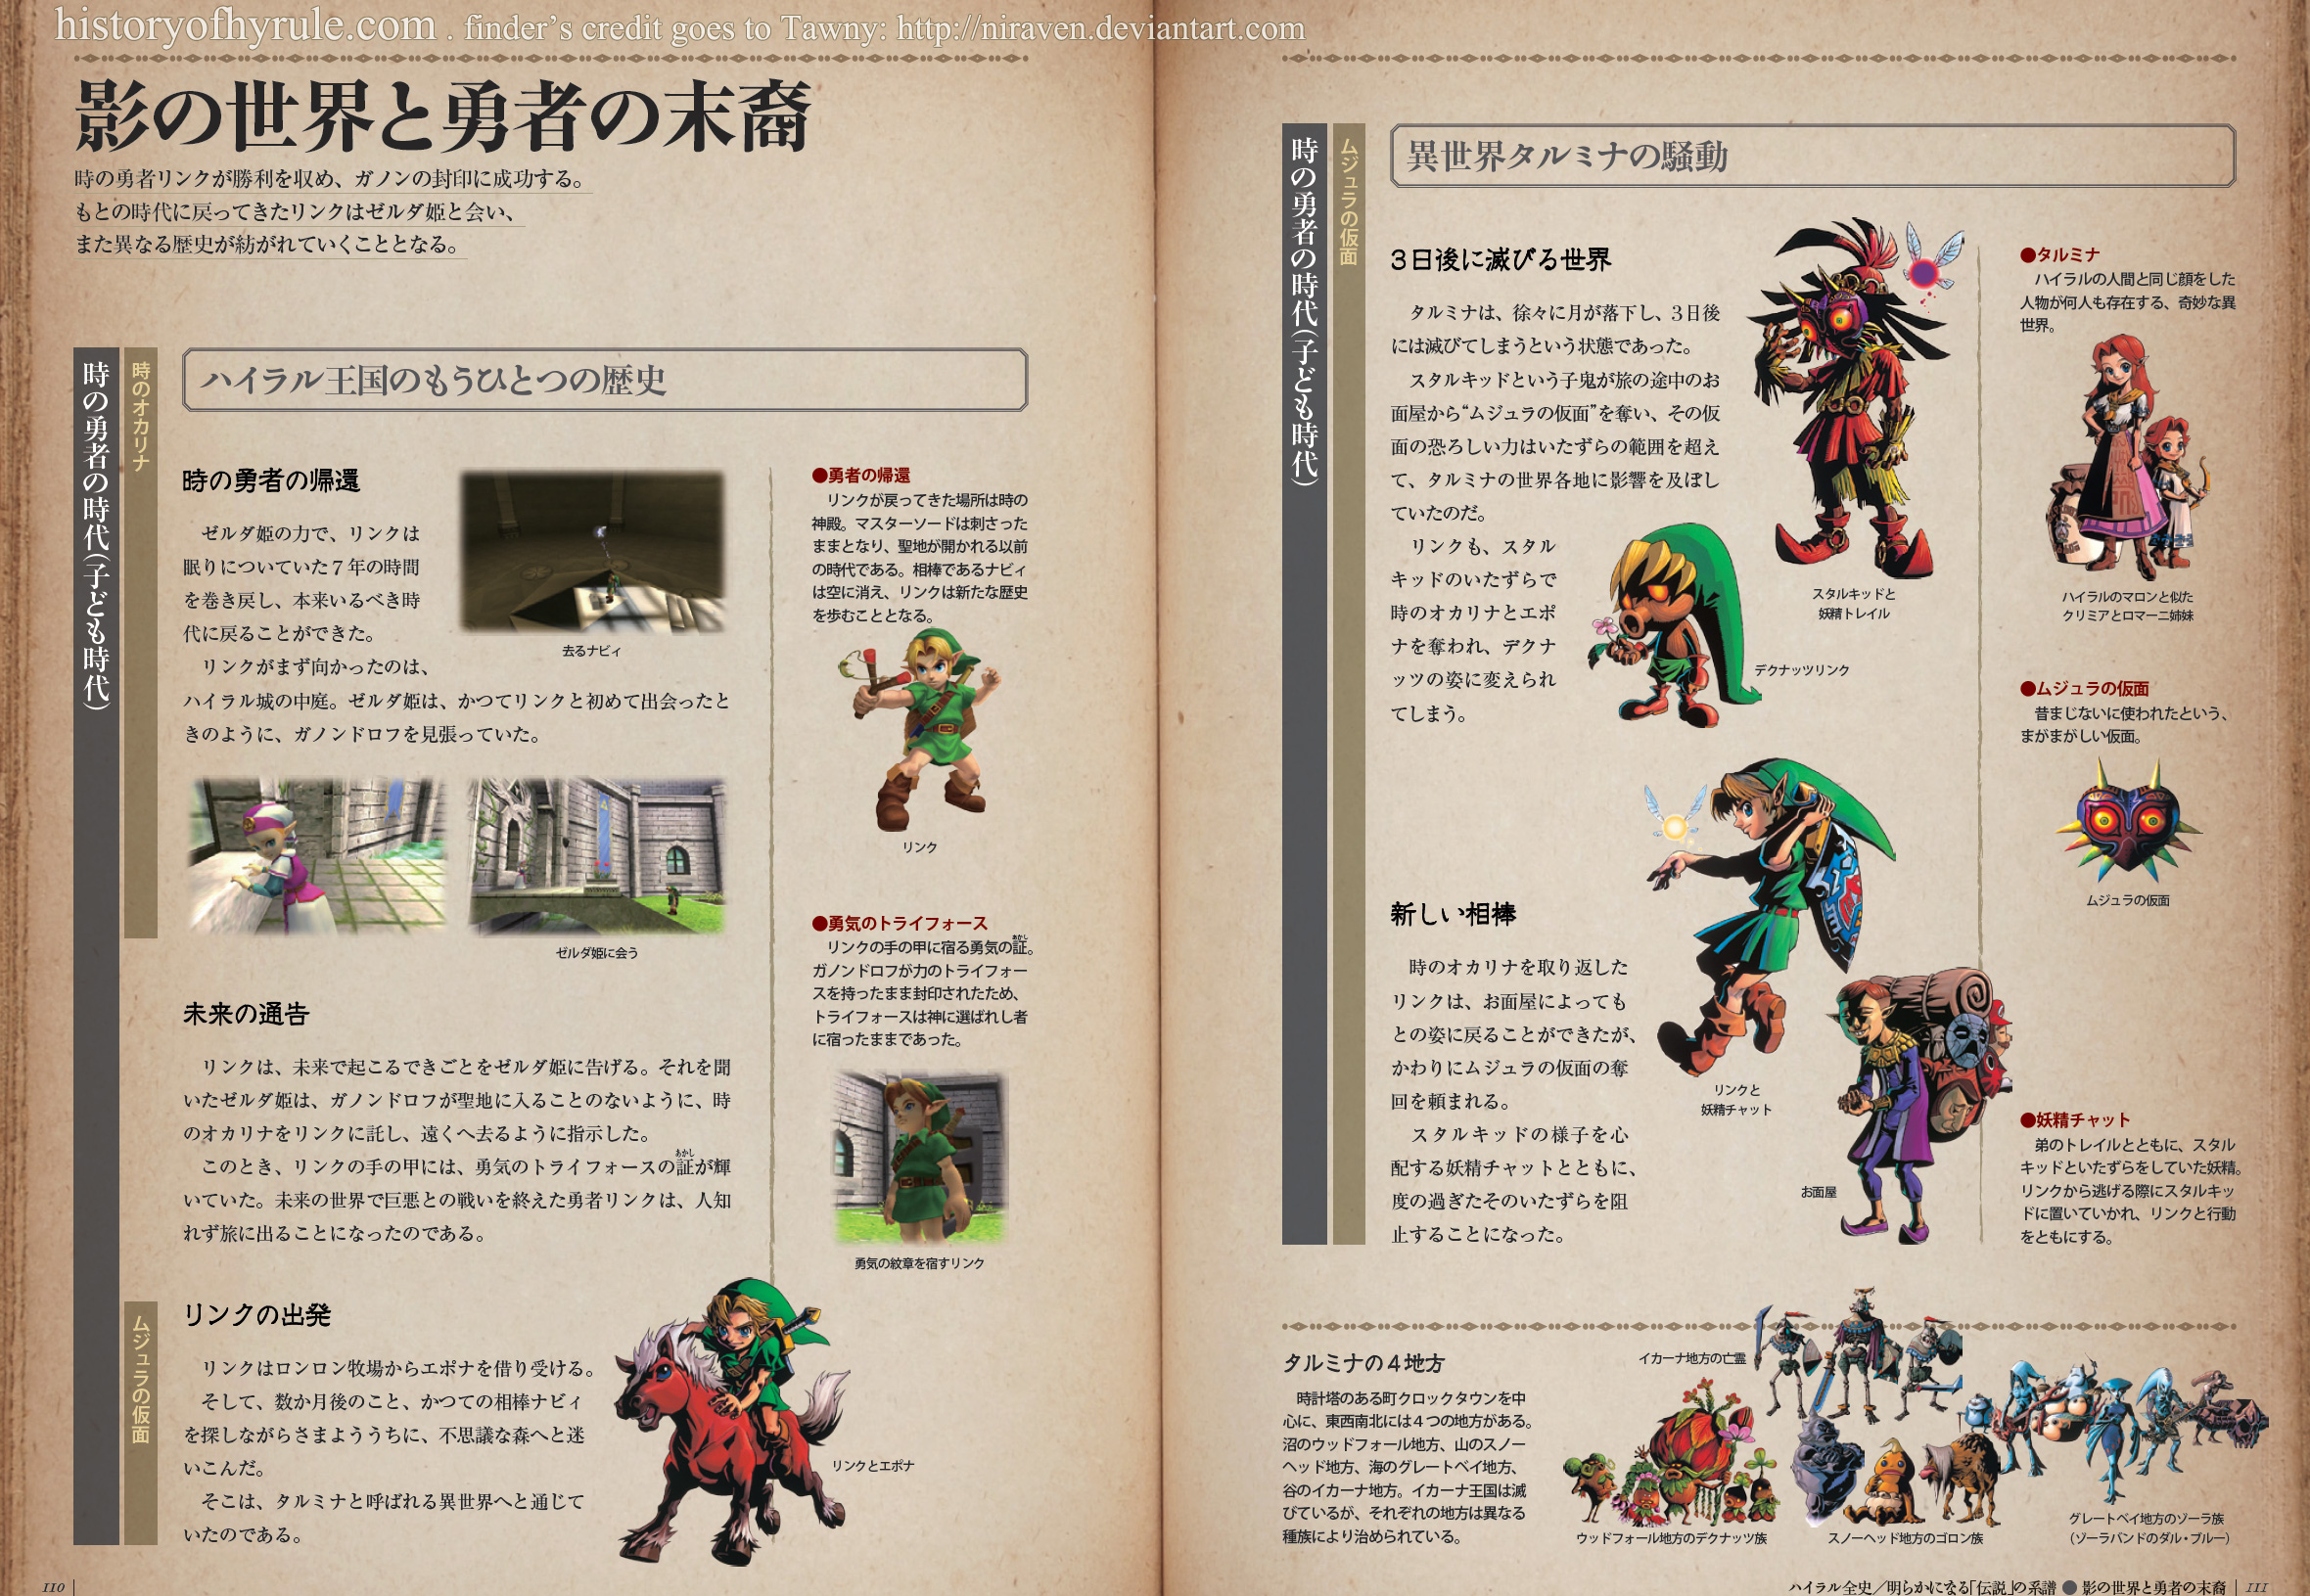  Translations - The Legend of Zelda: Ocarina of Time